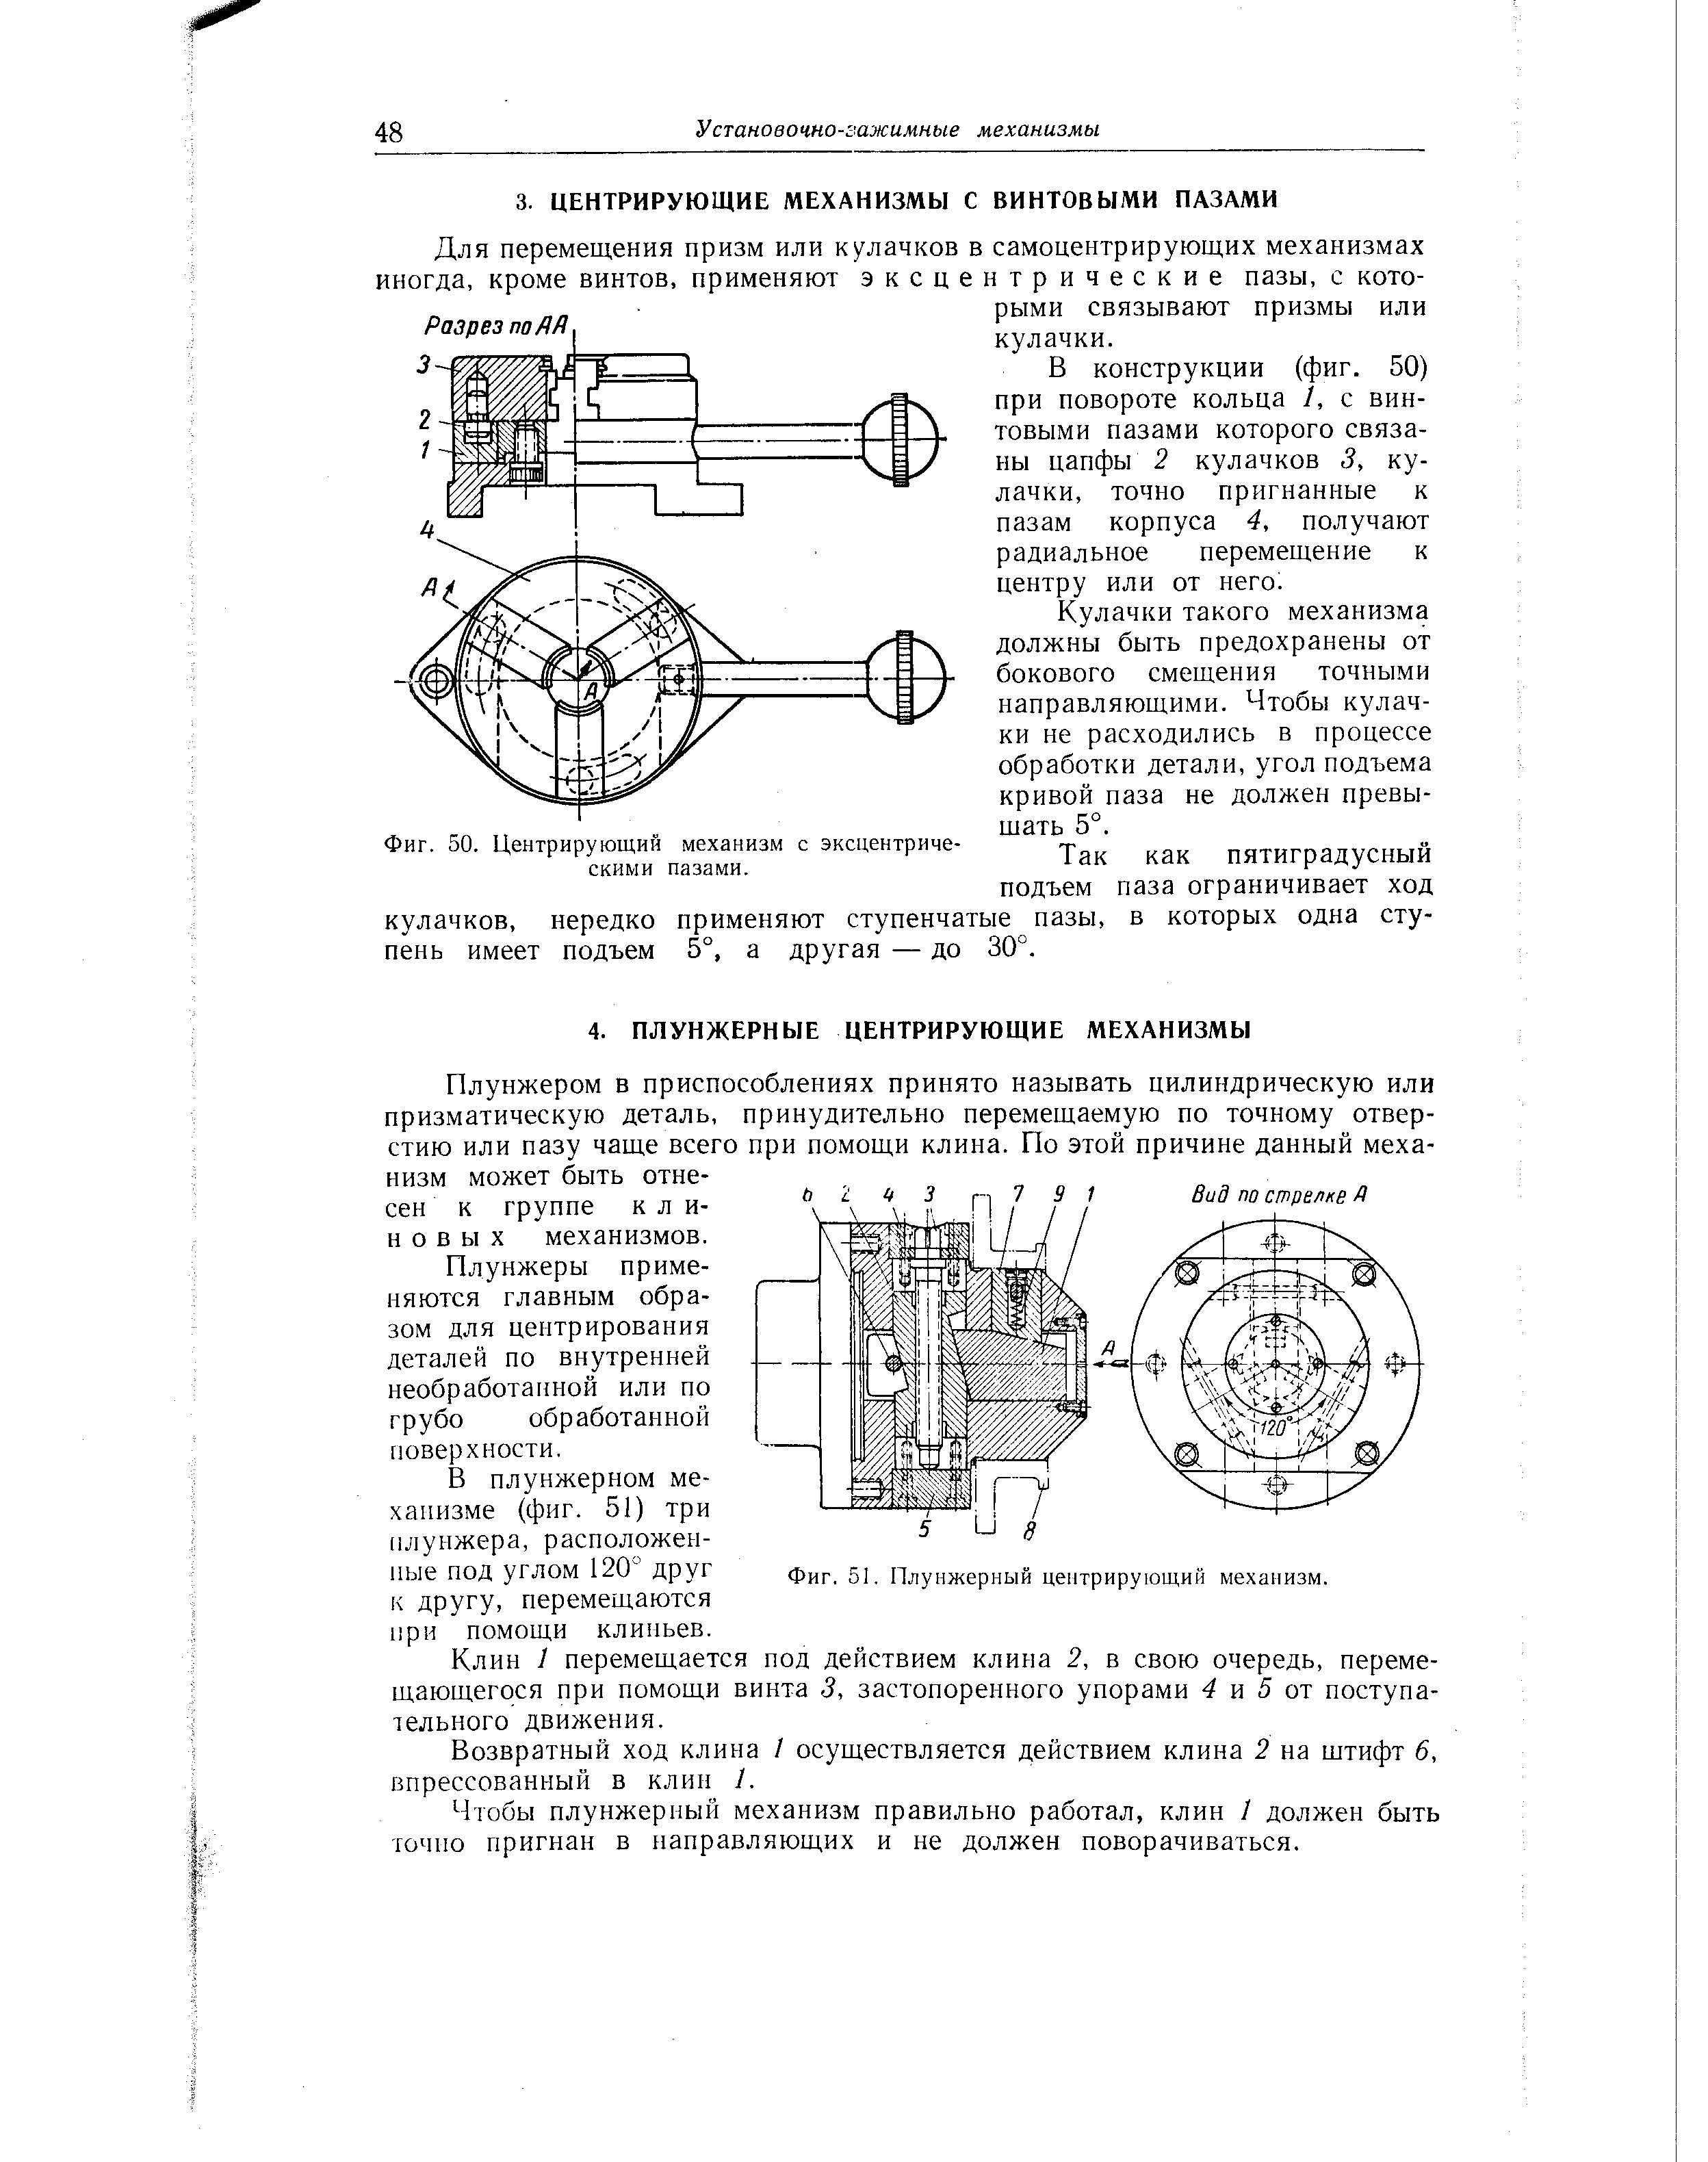 Фиг. 51. Плунжерный центрирующий механизм.
